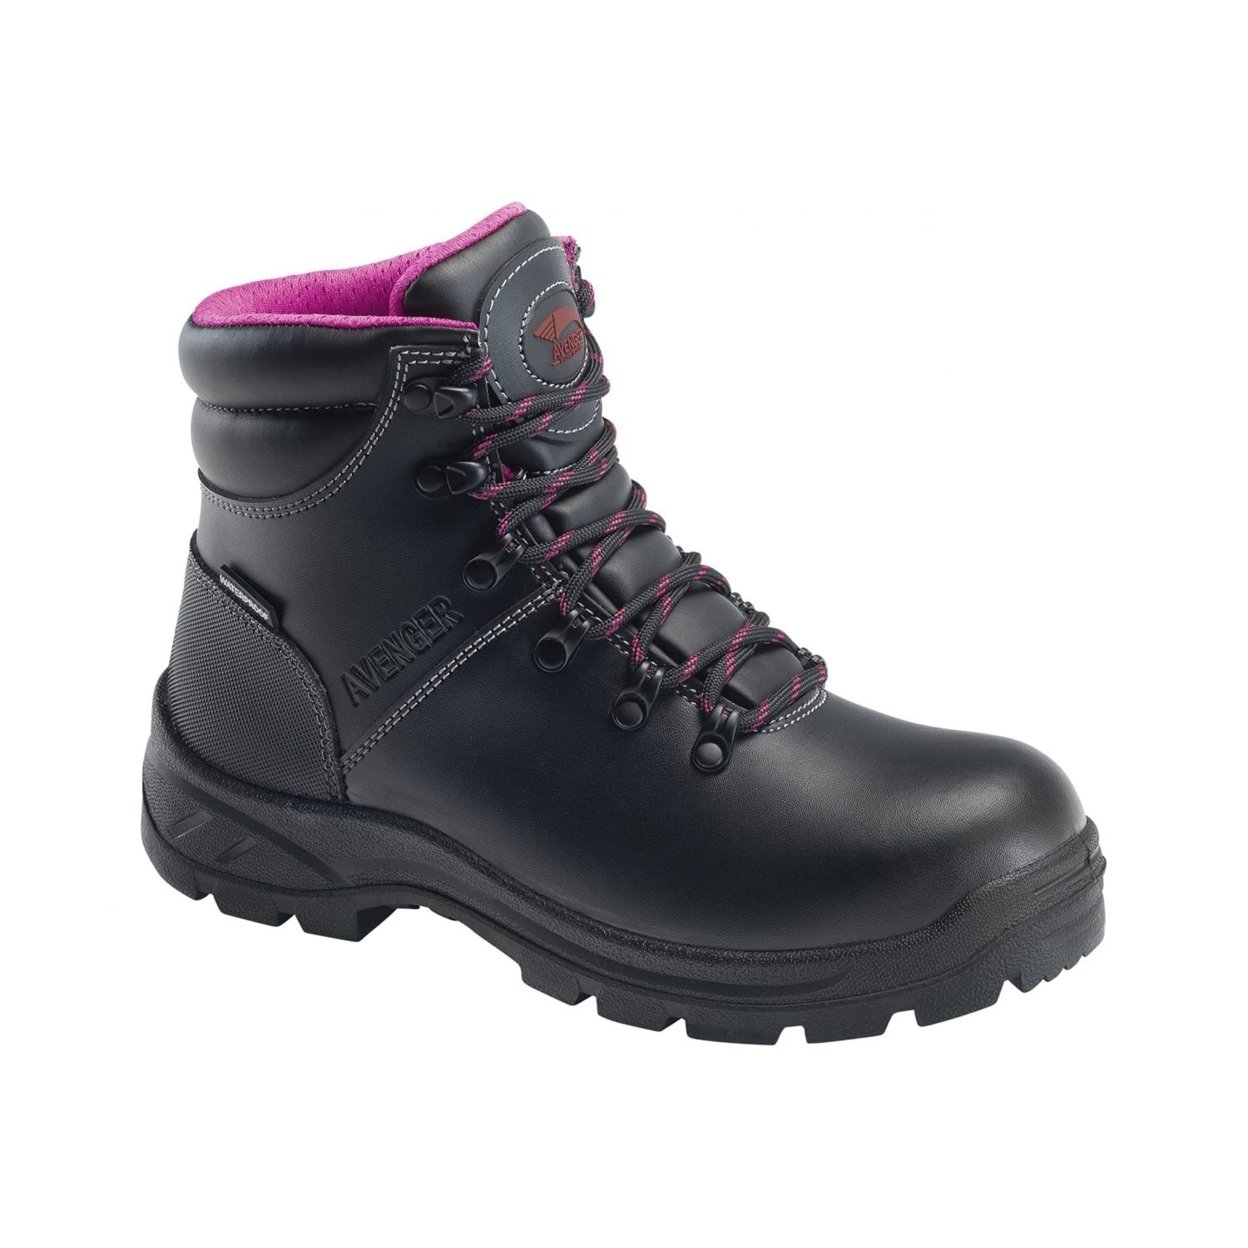 FSI FOOTWEAR SPECIALTIES INTERNATIONAL NAUTILUS Avenger Women's Builder Mid Soft Toe Waterproof Work Boots Black/Pink - A8674 BLACK/PINK - B